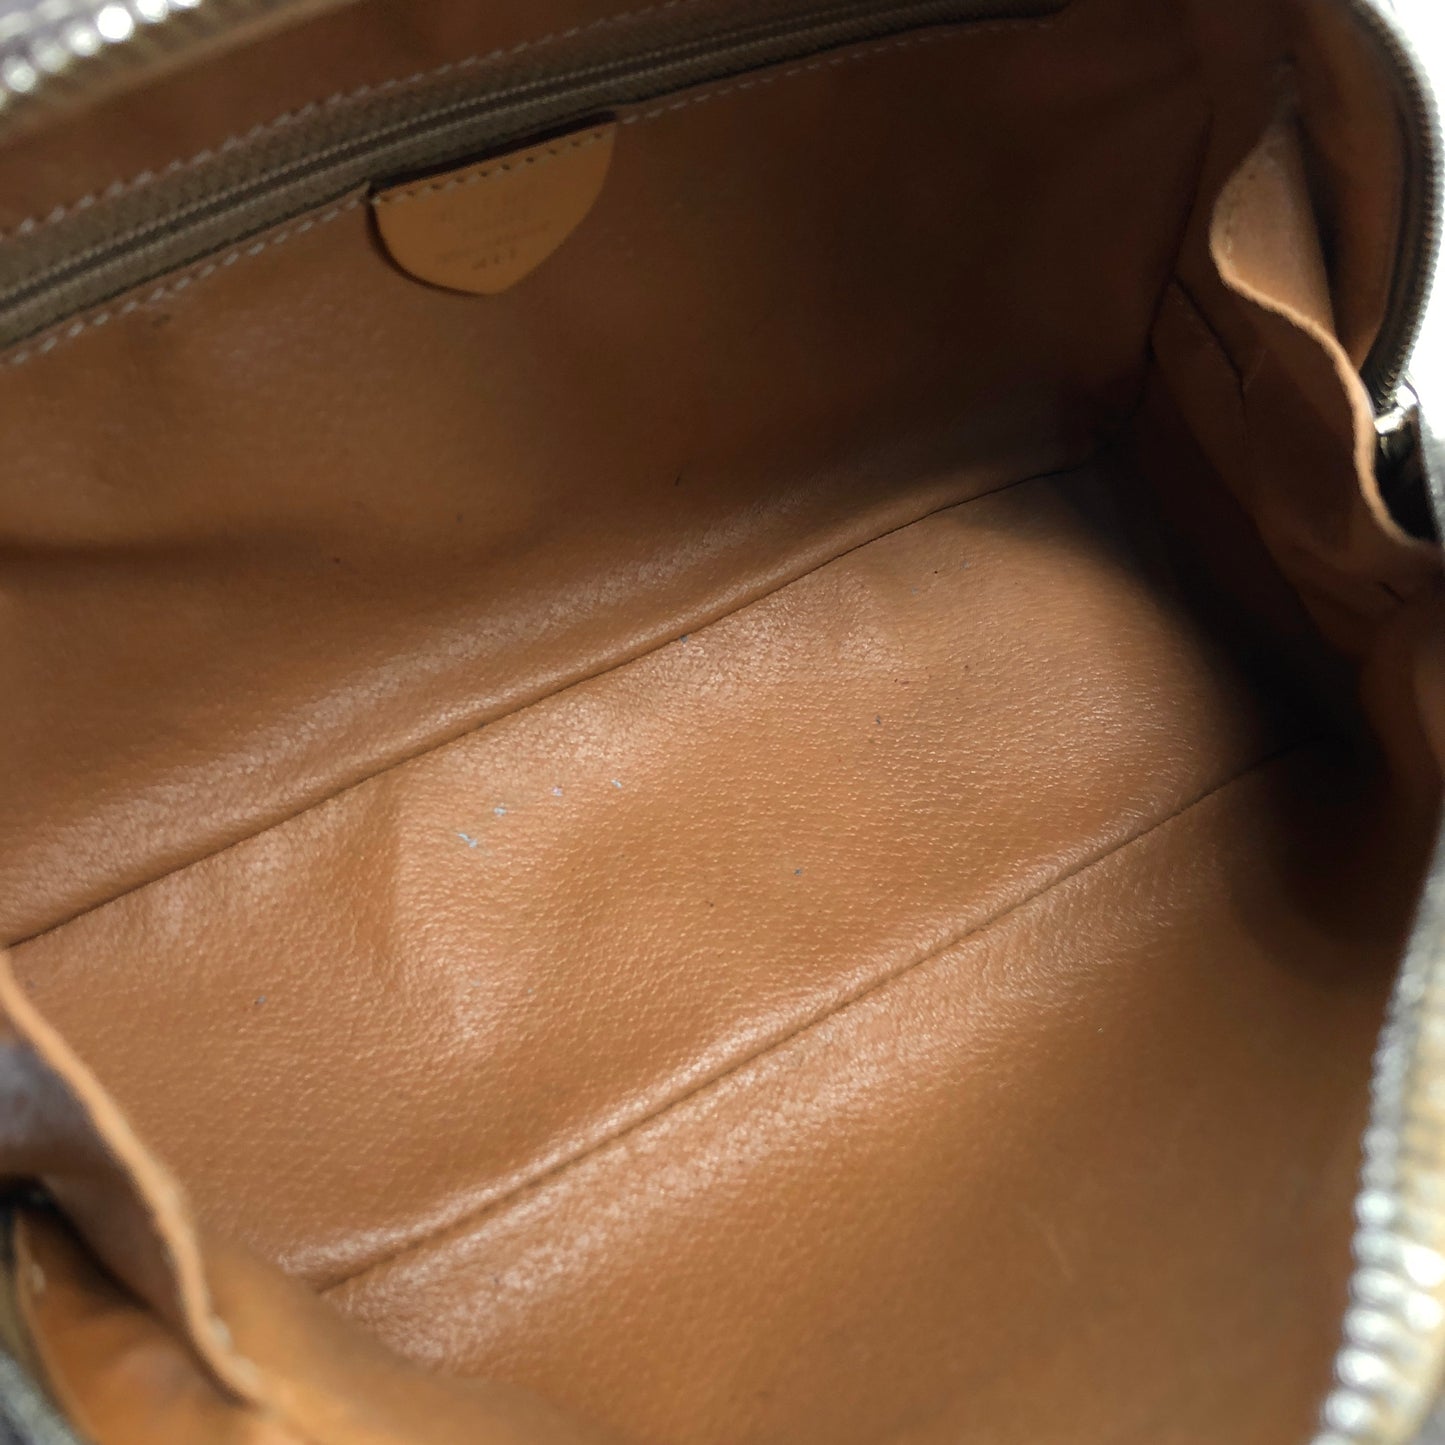 CELINE Macadam Blason Leather Two-way Handbag Shoulder bag Brown Vintage hzumnt